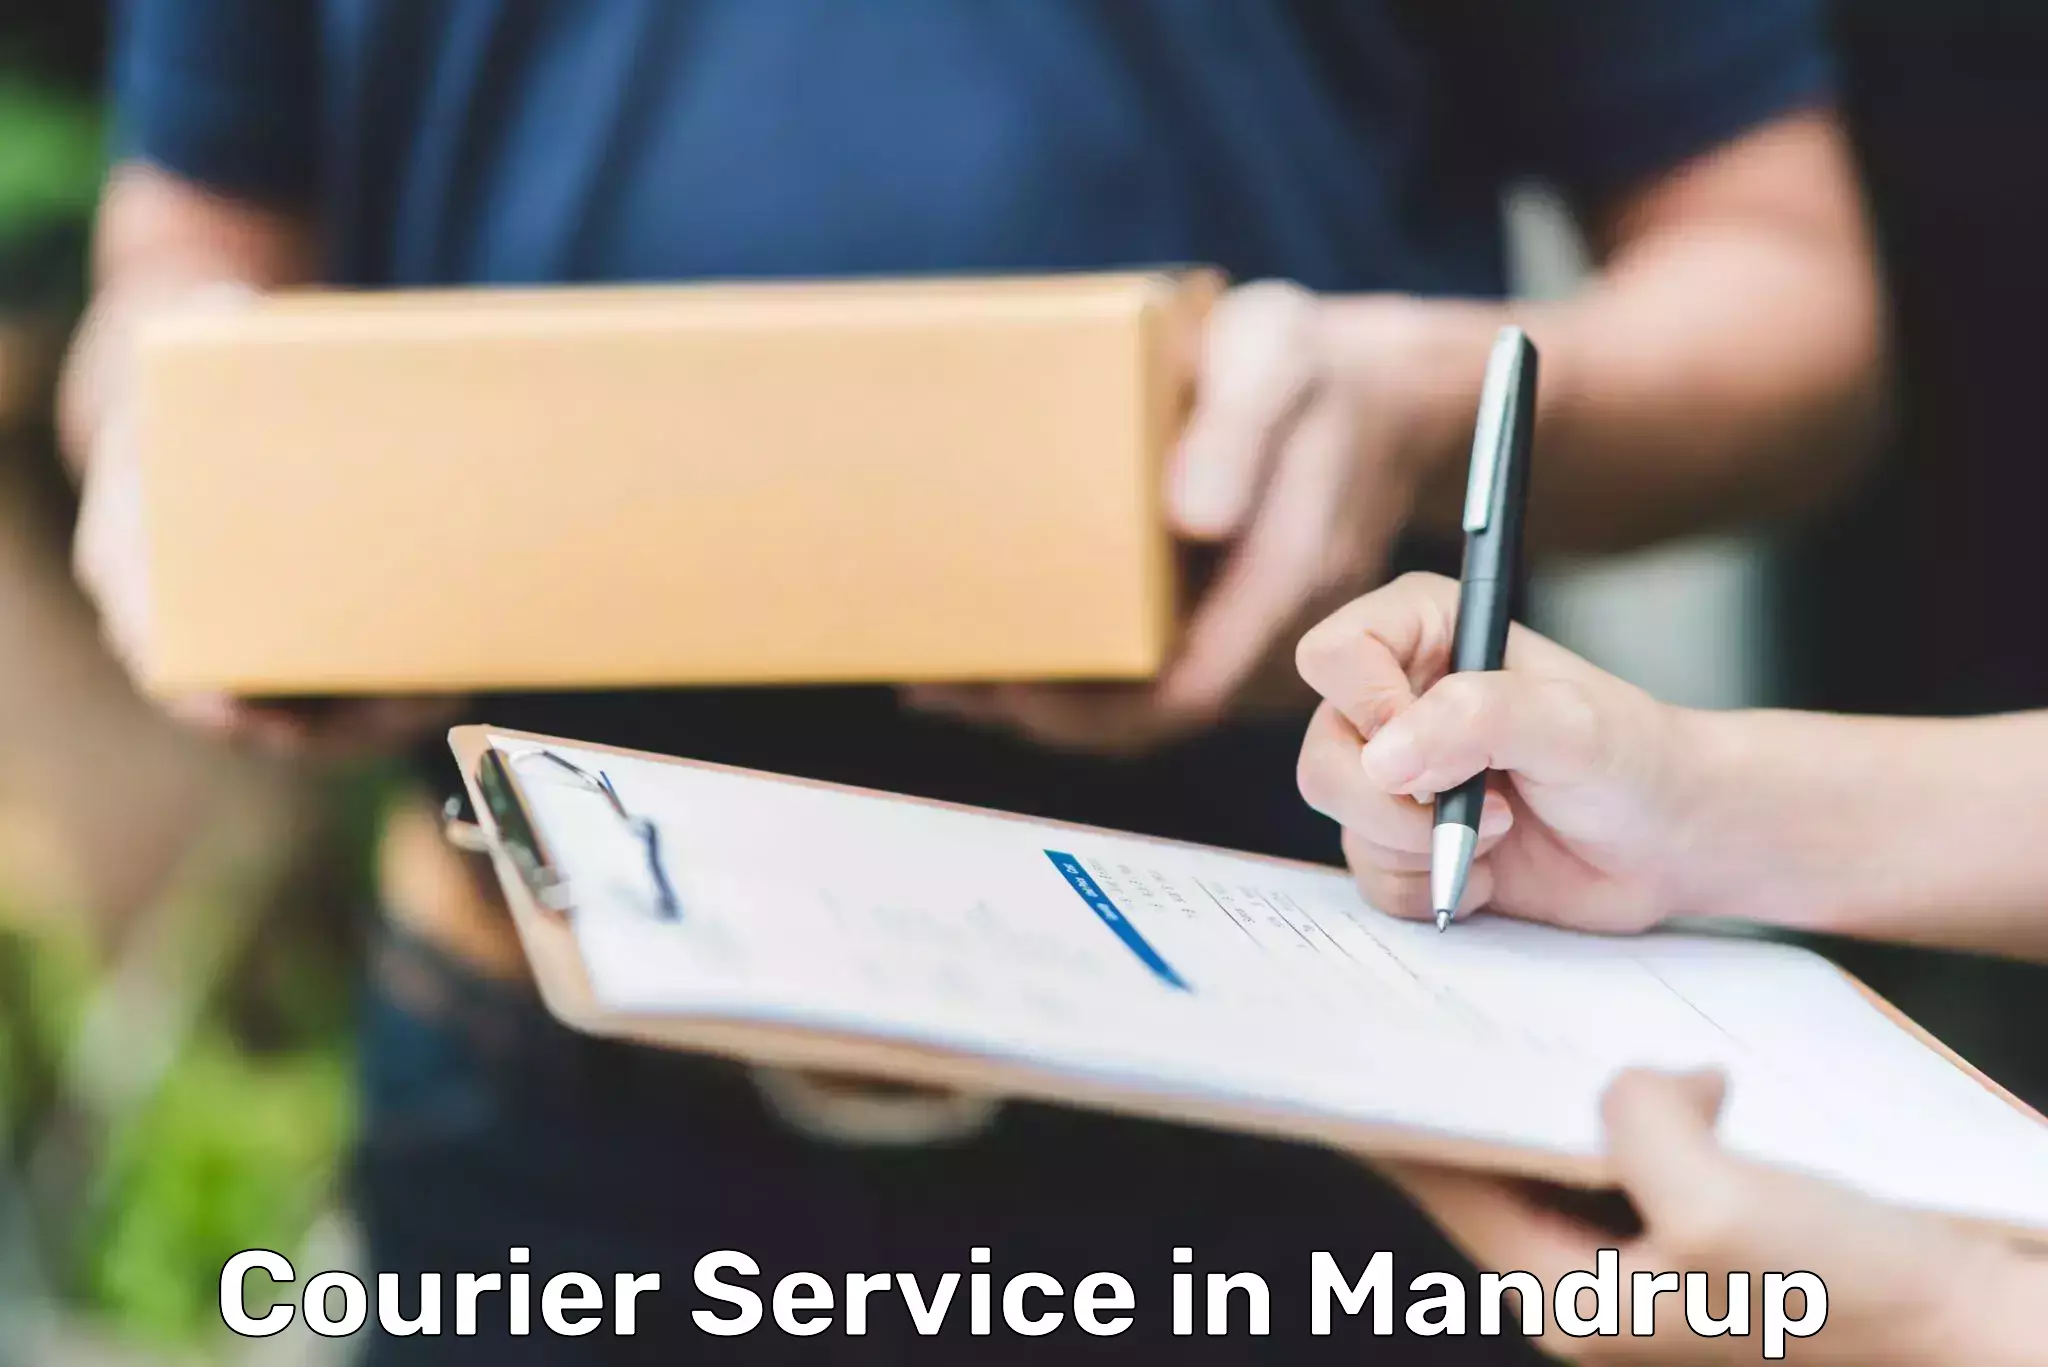 Efficient parcel service in Mandrup